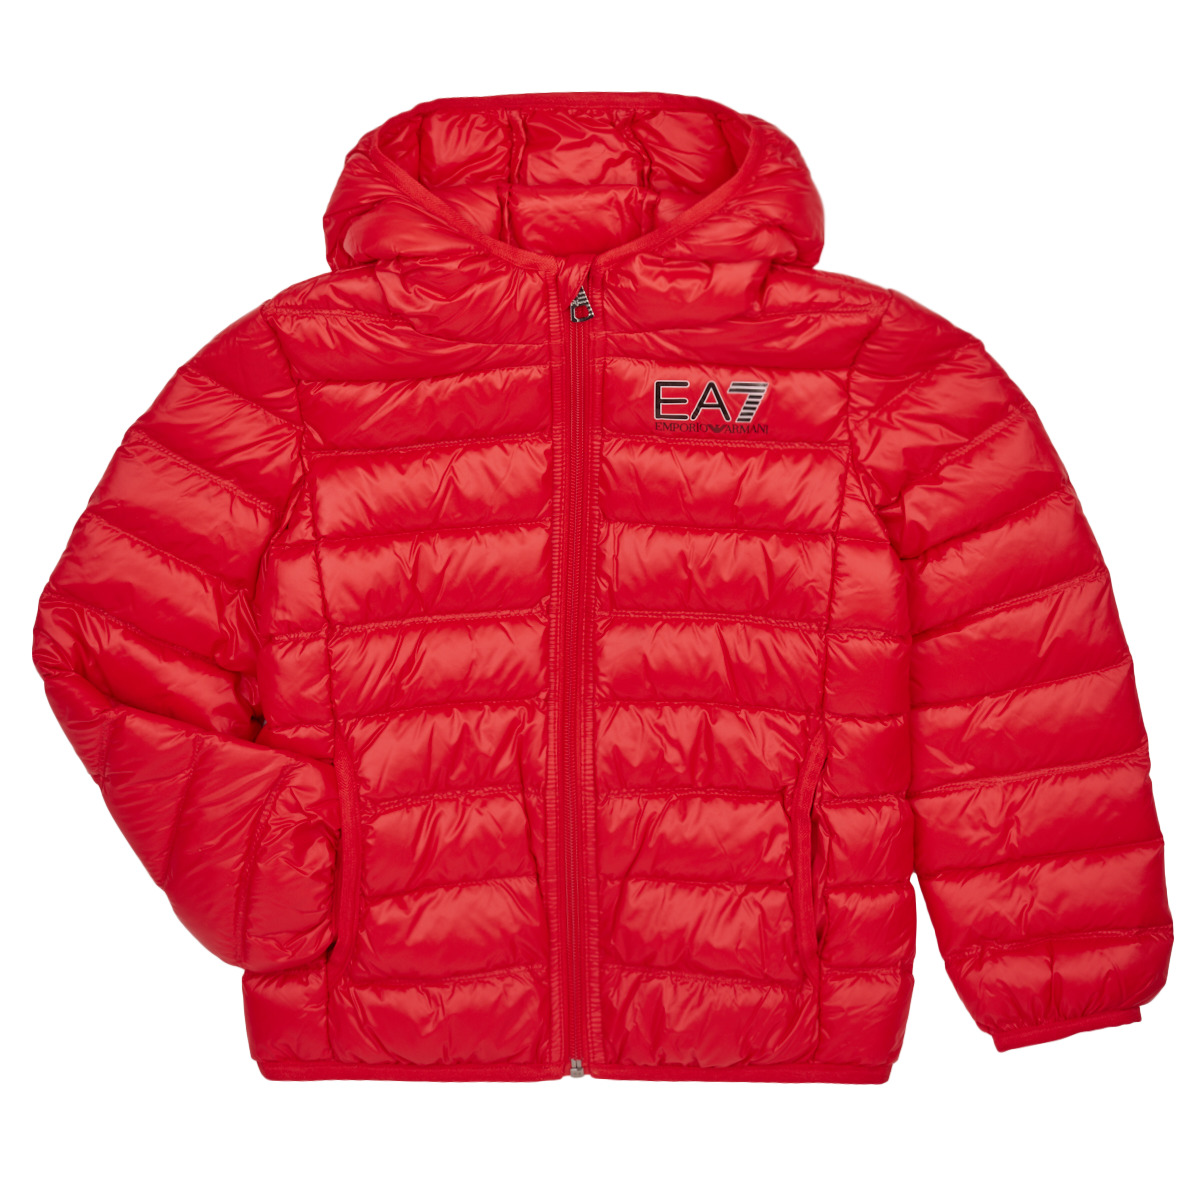 emporio armani ea7  8nbb05-bn29z-1451  boys's children's jacket in red